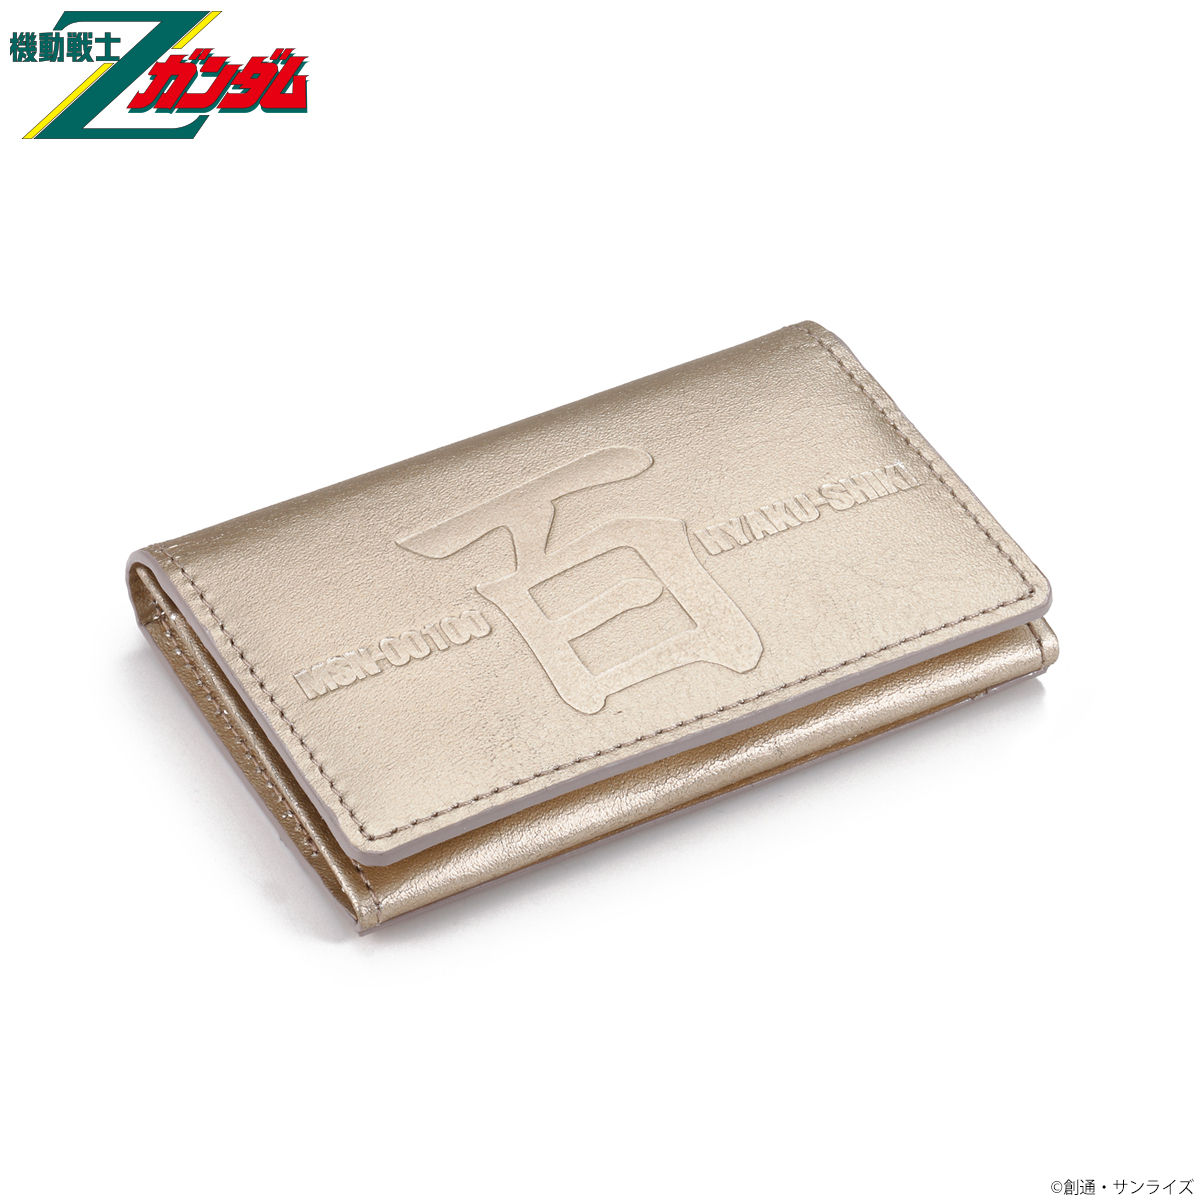 Mobile Suit Zeta Gundam MSN-00100 Business Card Case